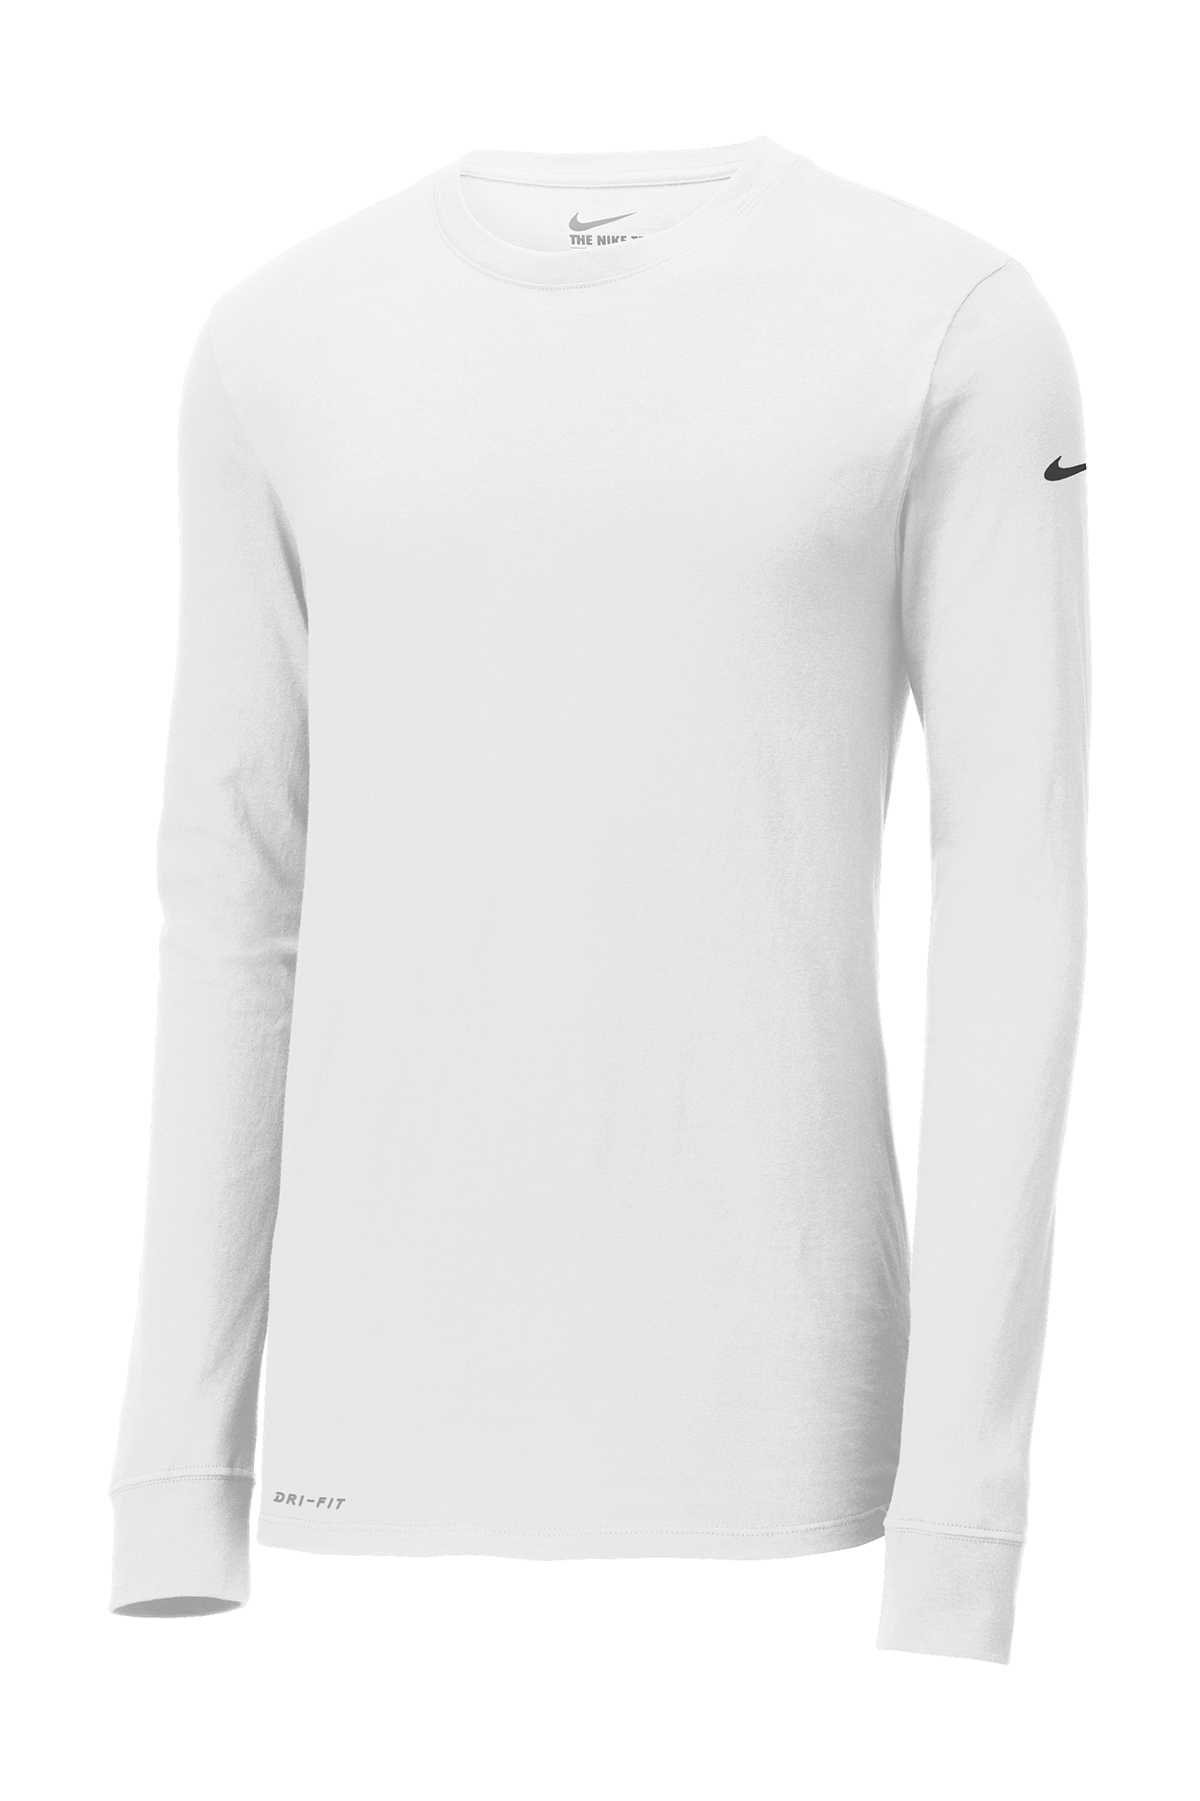 Nike Dri-FIT Cotton/Poly Long Sleeve 